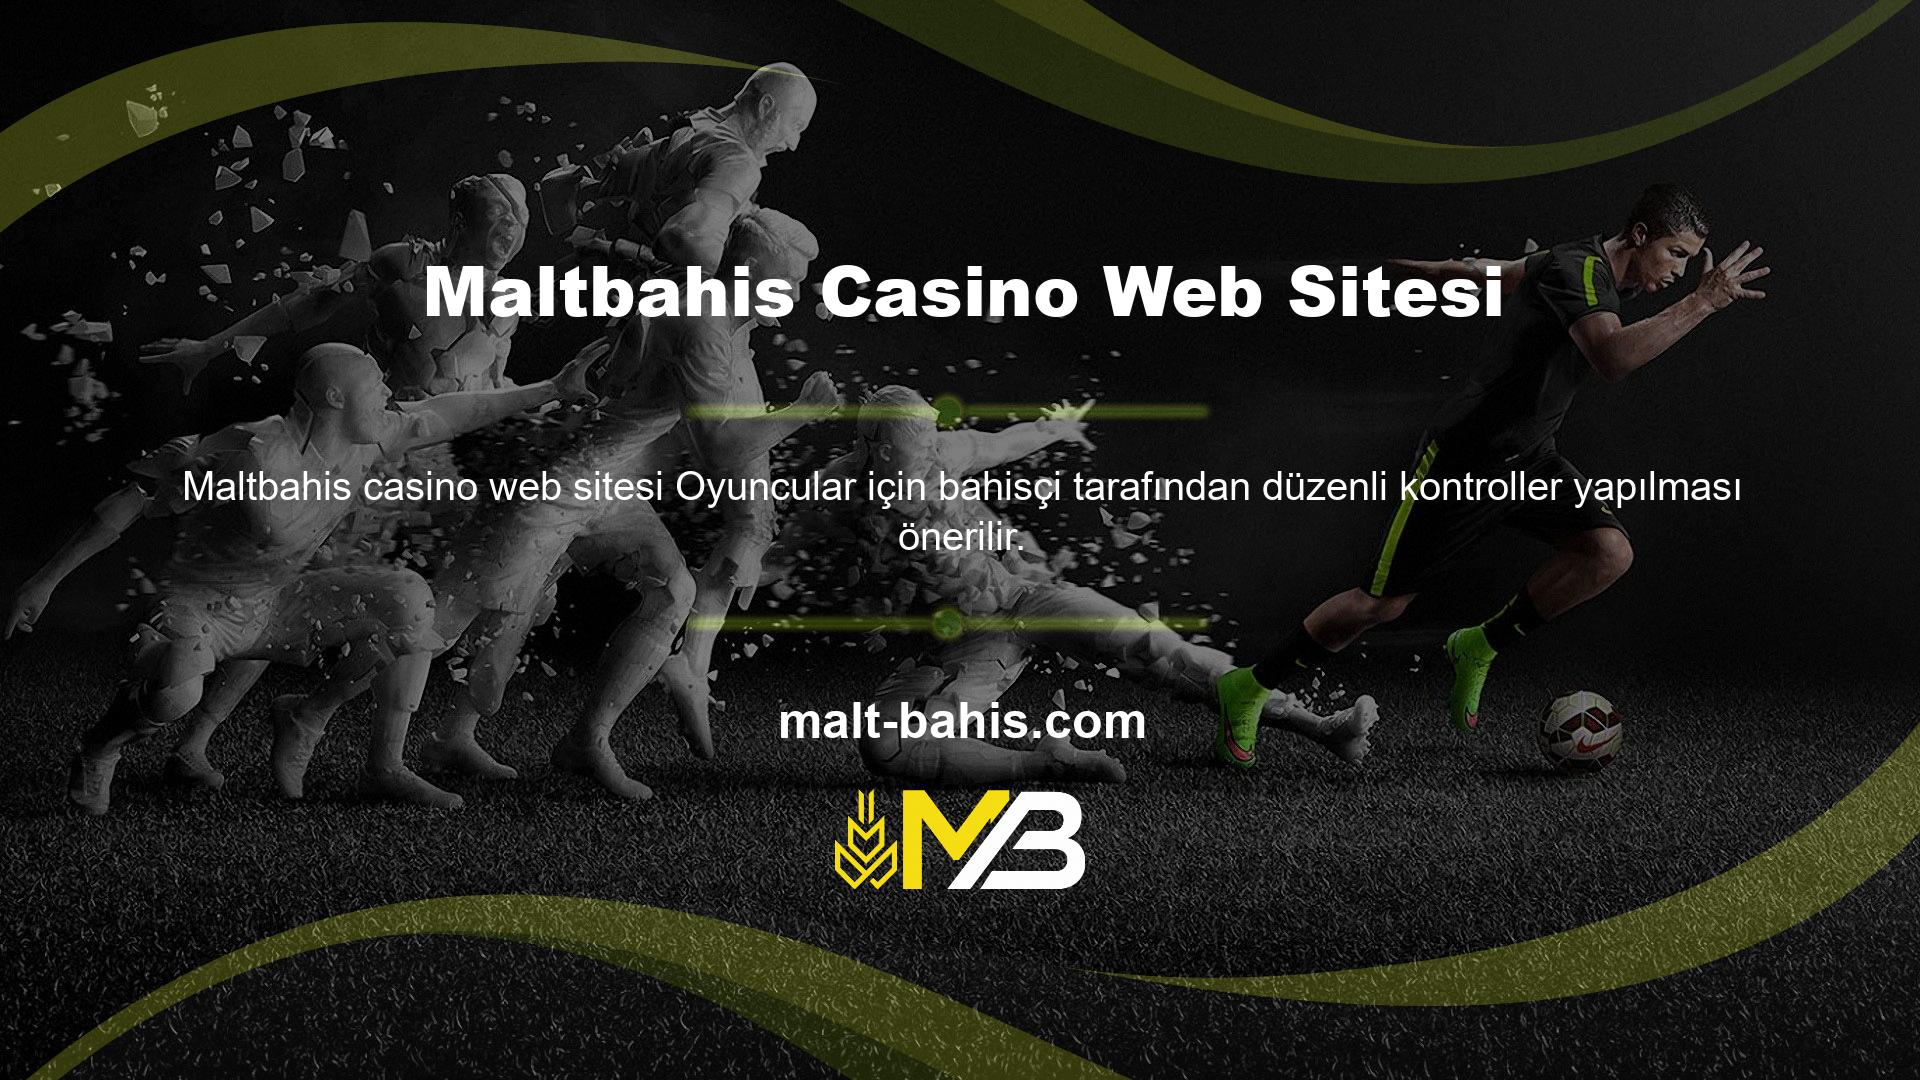 Maltbahis casino web sitesi